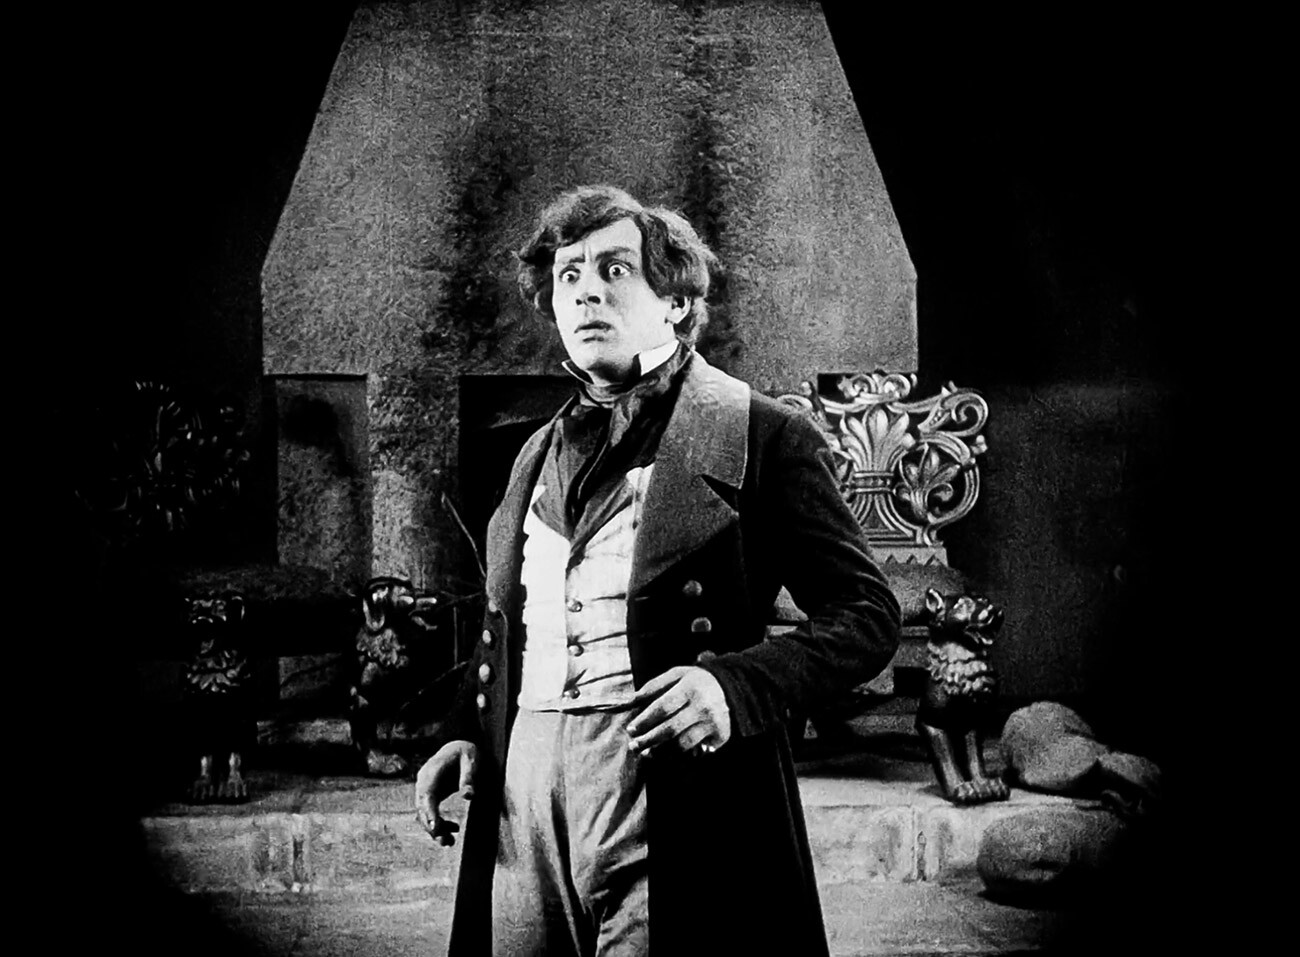 Gustav von Wangenheim dalam film “Nosferatu”.